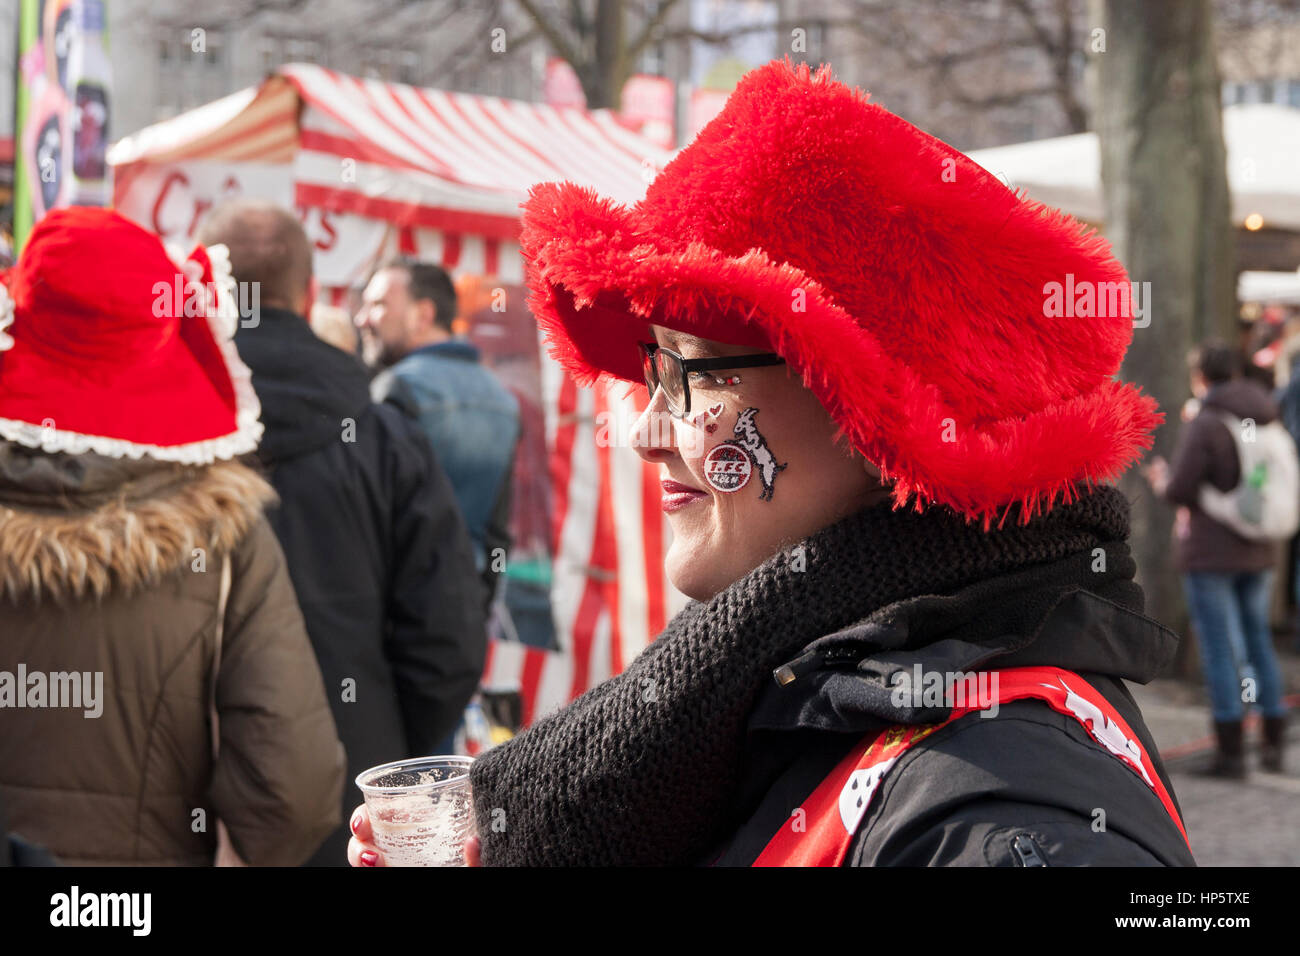 Berlino, Germania. 19 Feb, 2017. Sfilata di Carnevale. Berlino, Germania. Credito: Michael Koenig/Alamy Live News Foto Stock